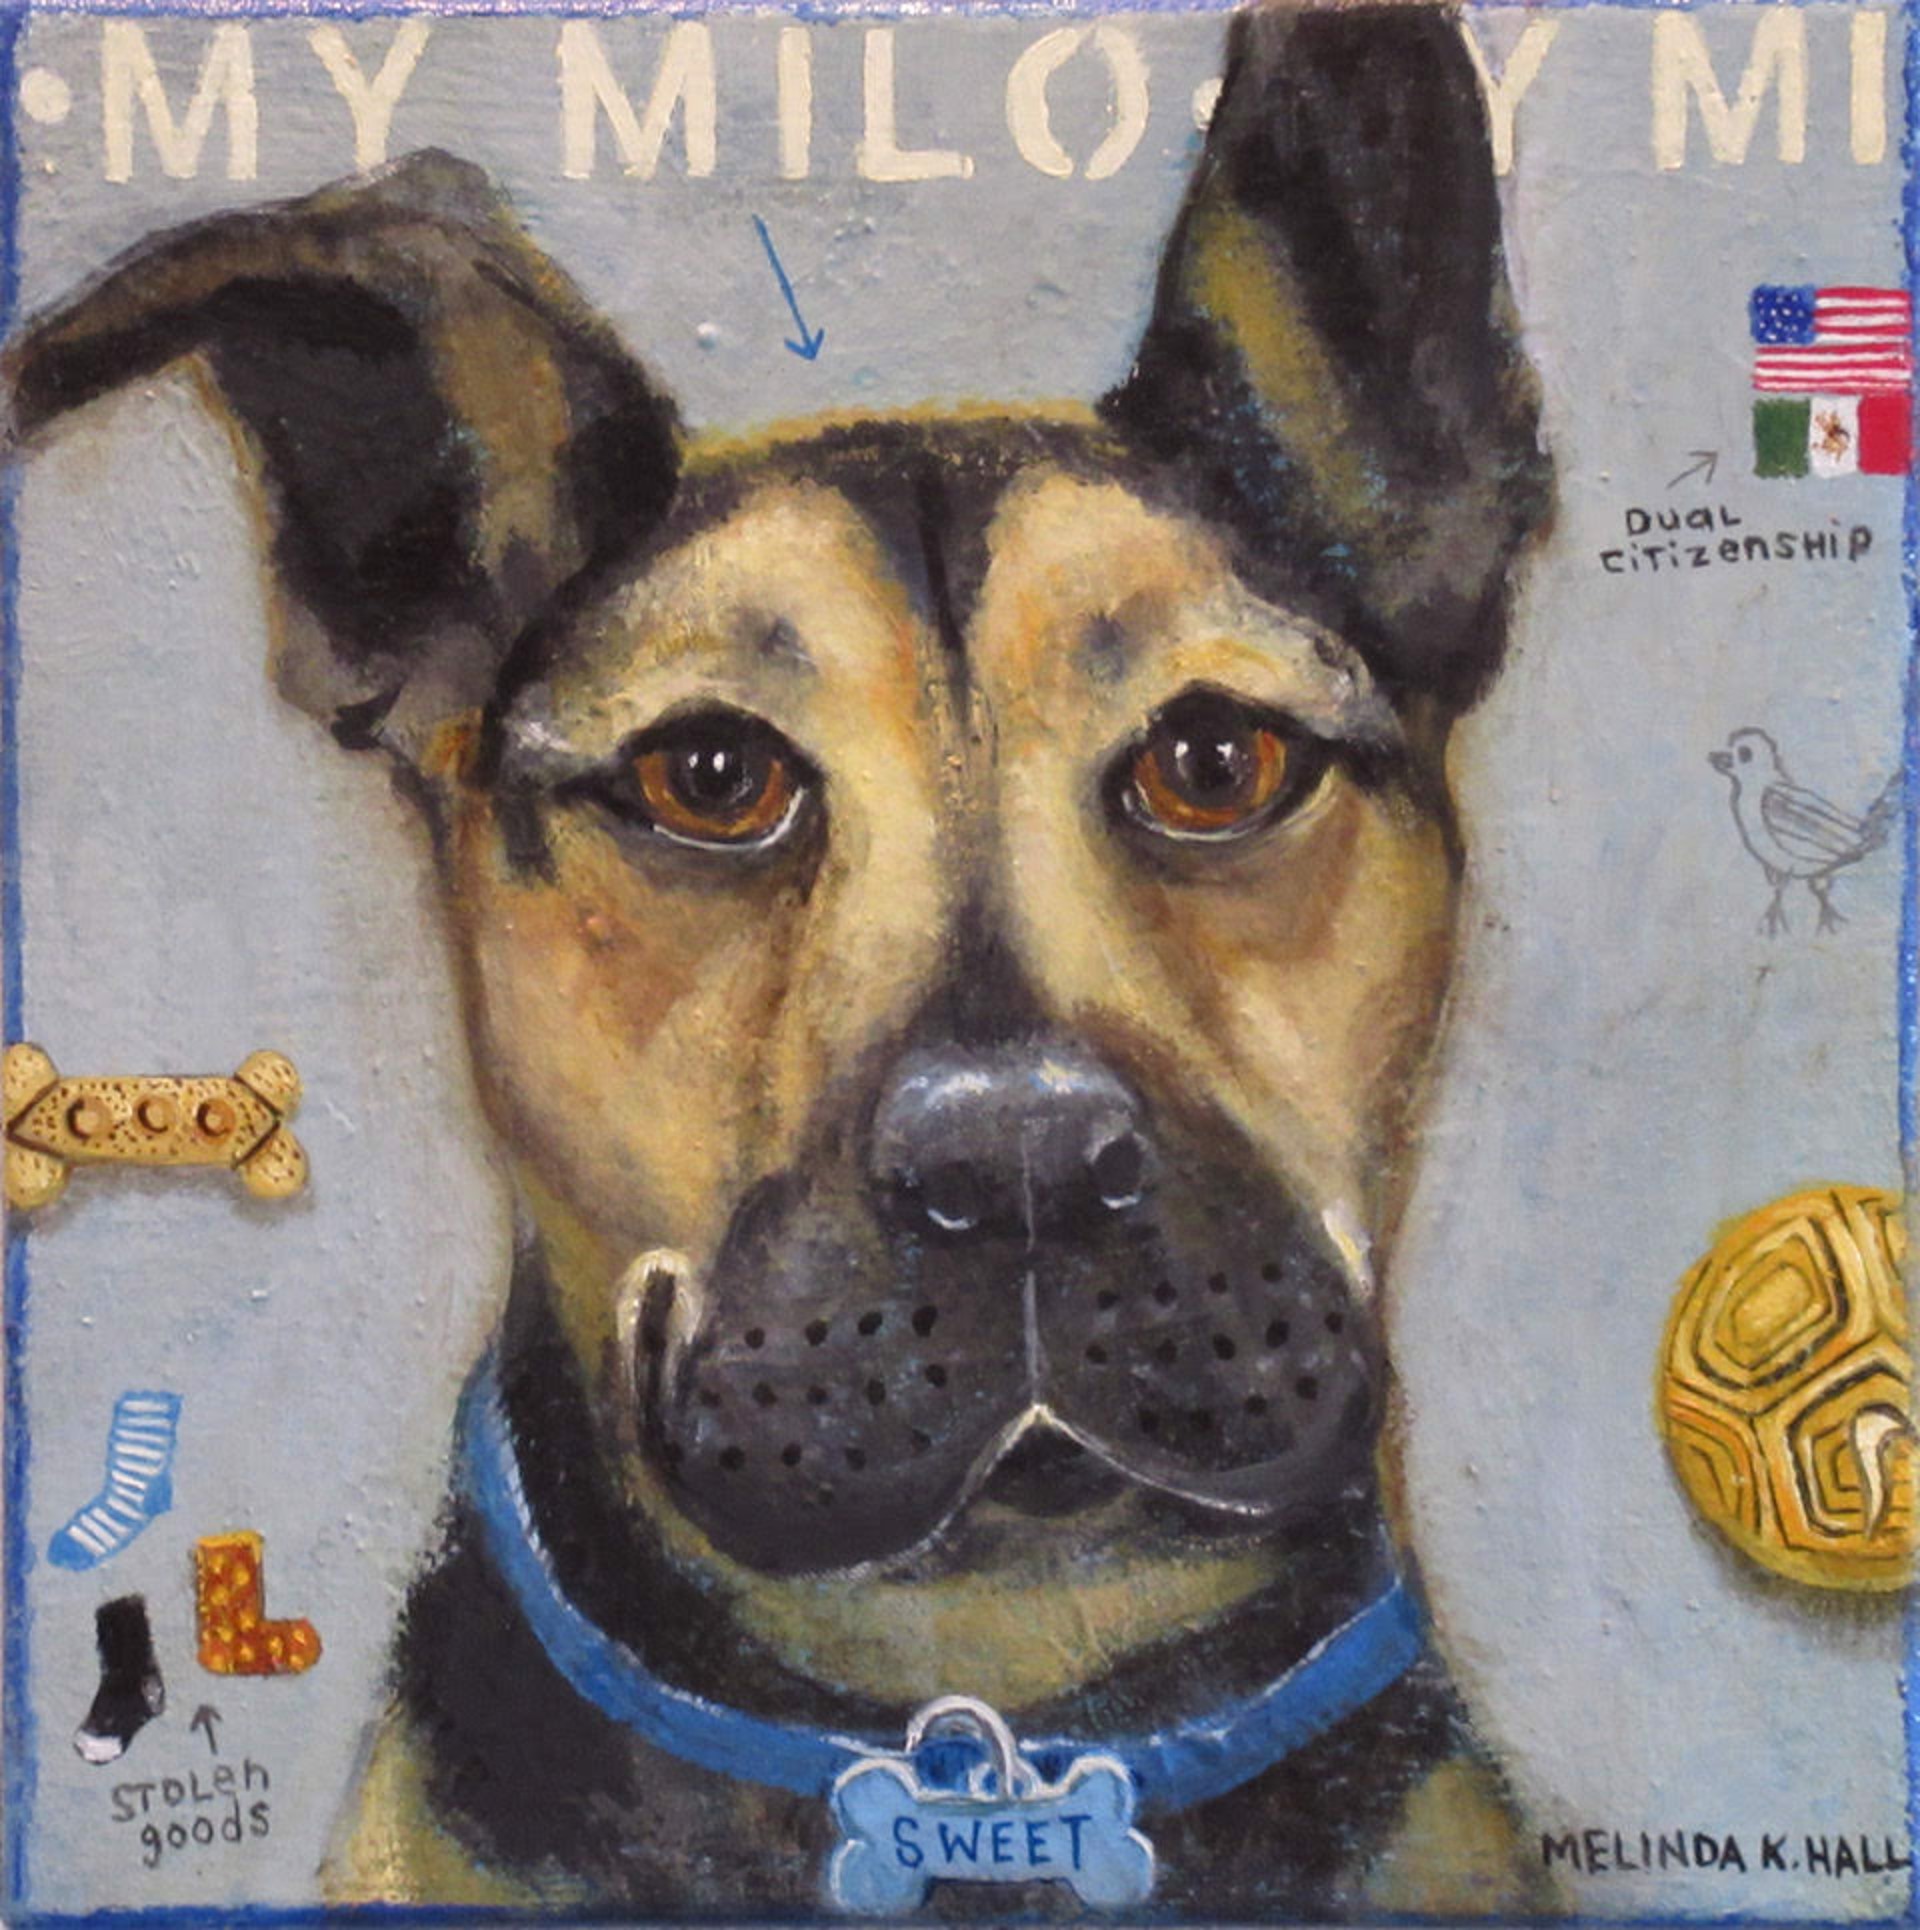 Milo, a commission by Melinda K. Hall